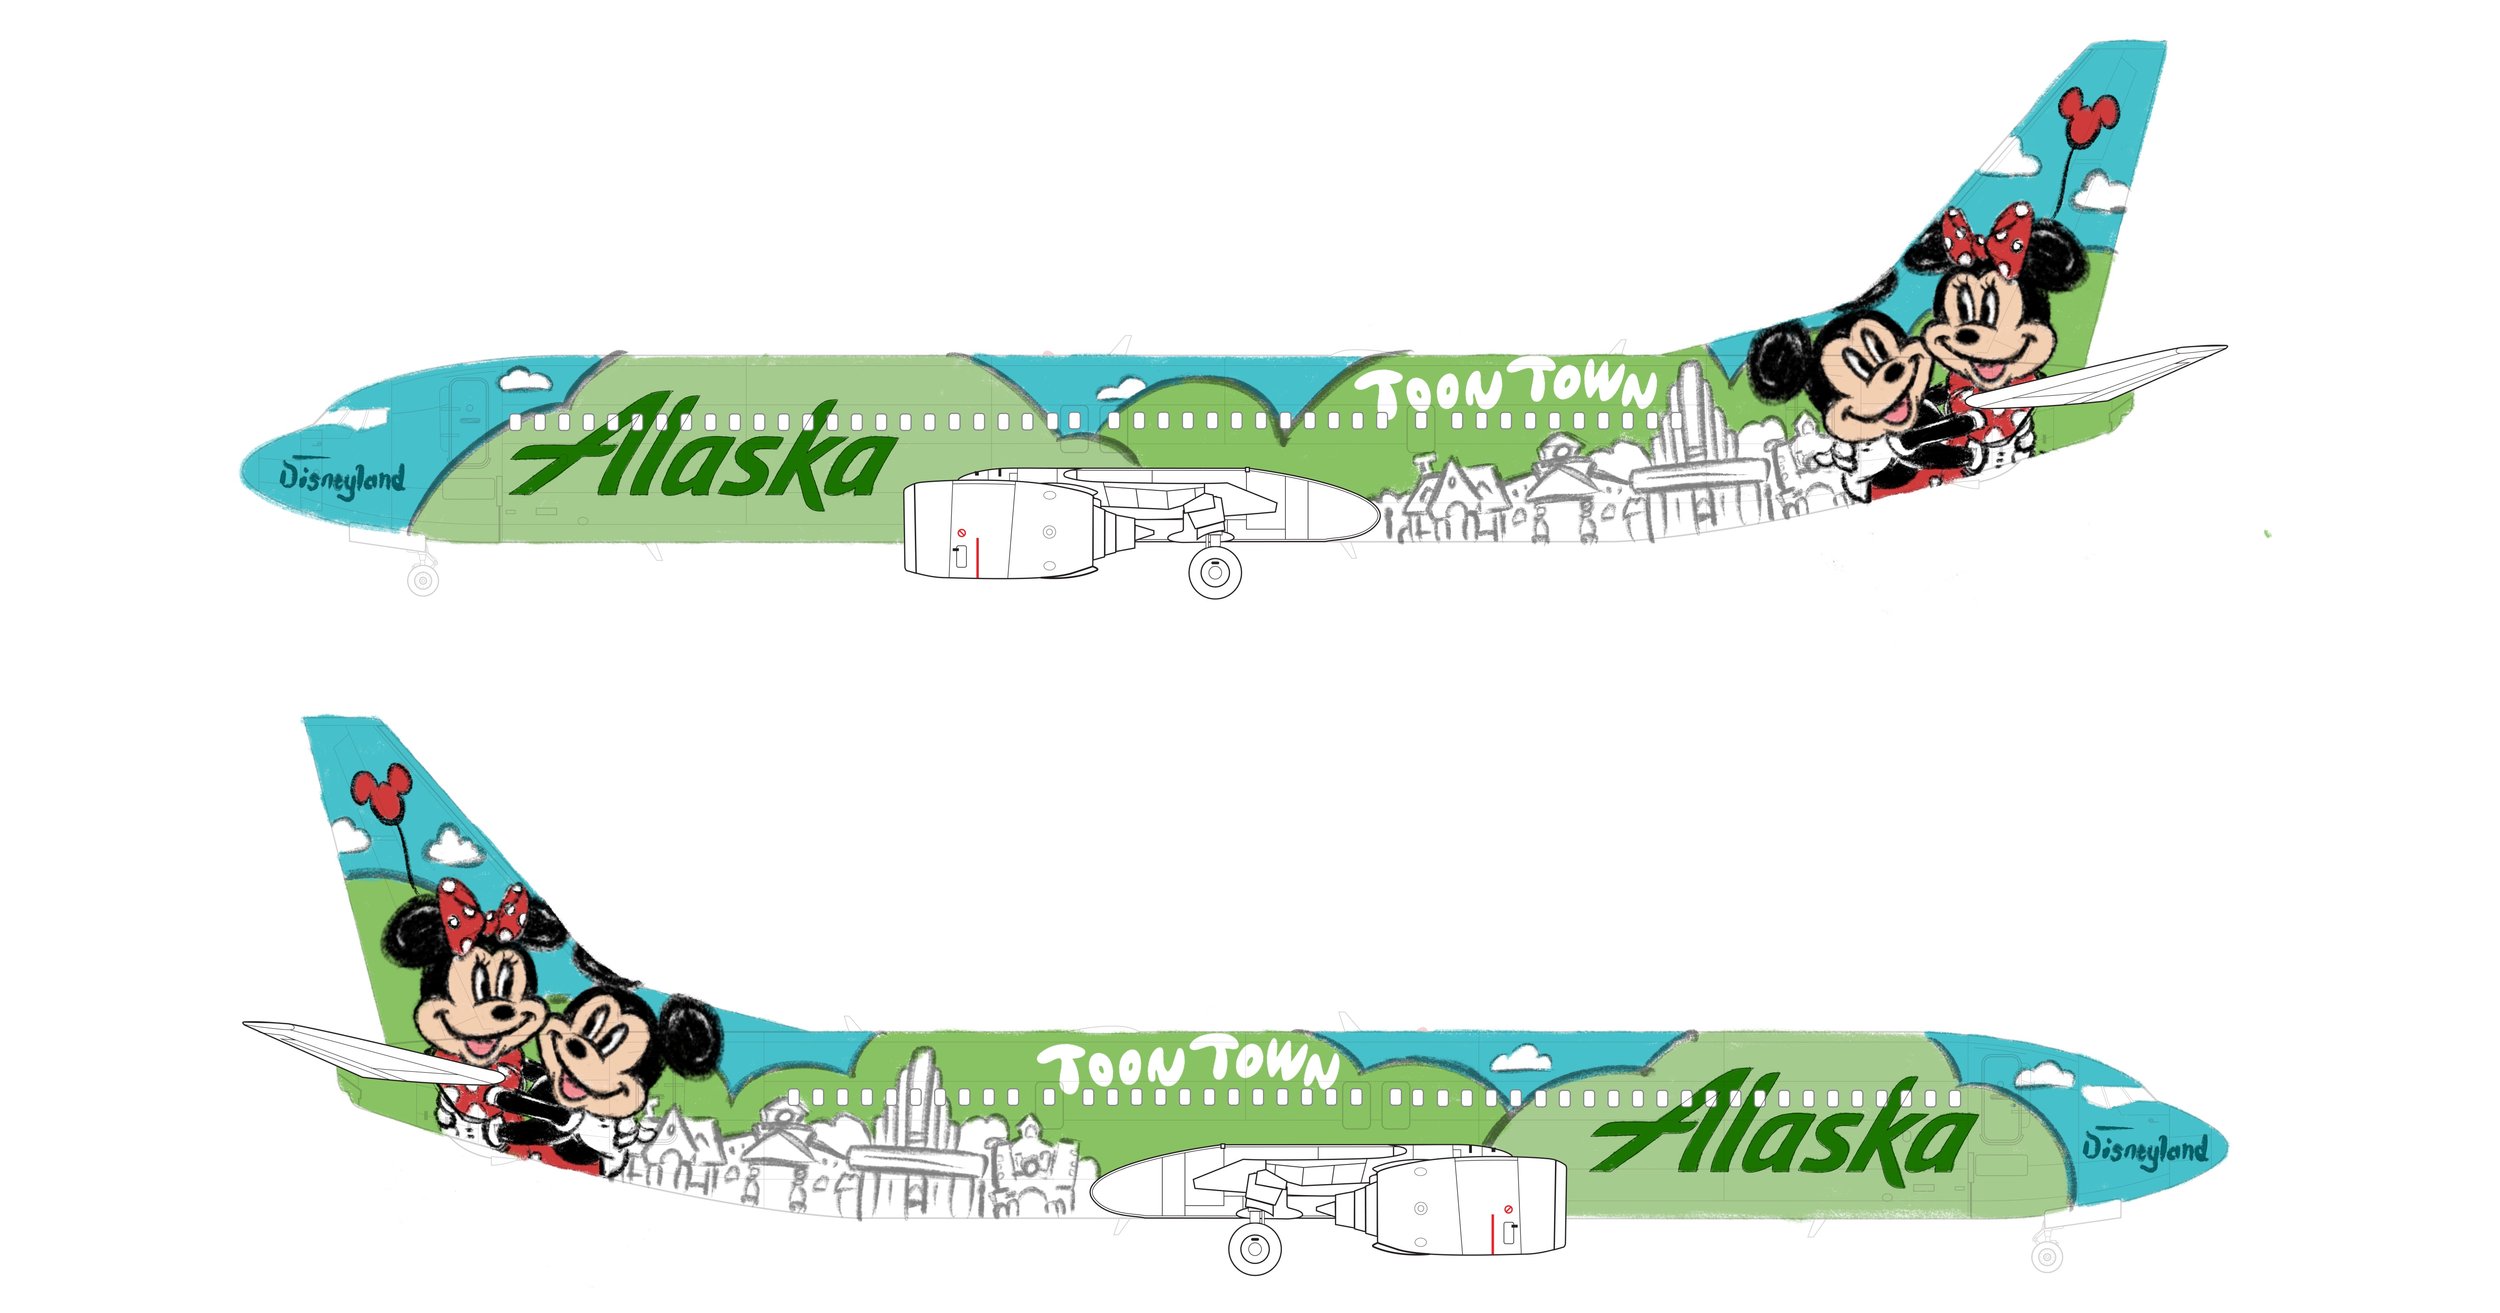 DLR_ToonTown_Alaska_Plane_Concept_2_Sketch_012423.JPG